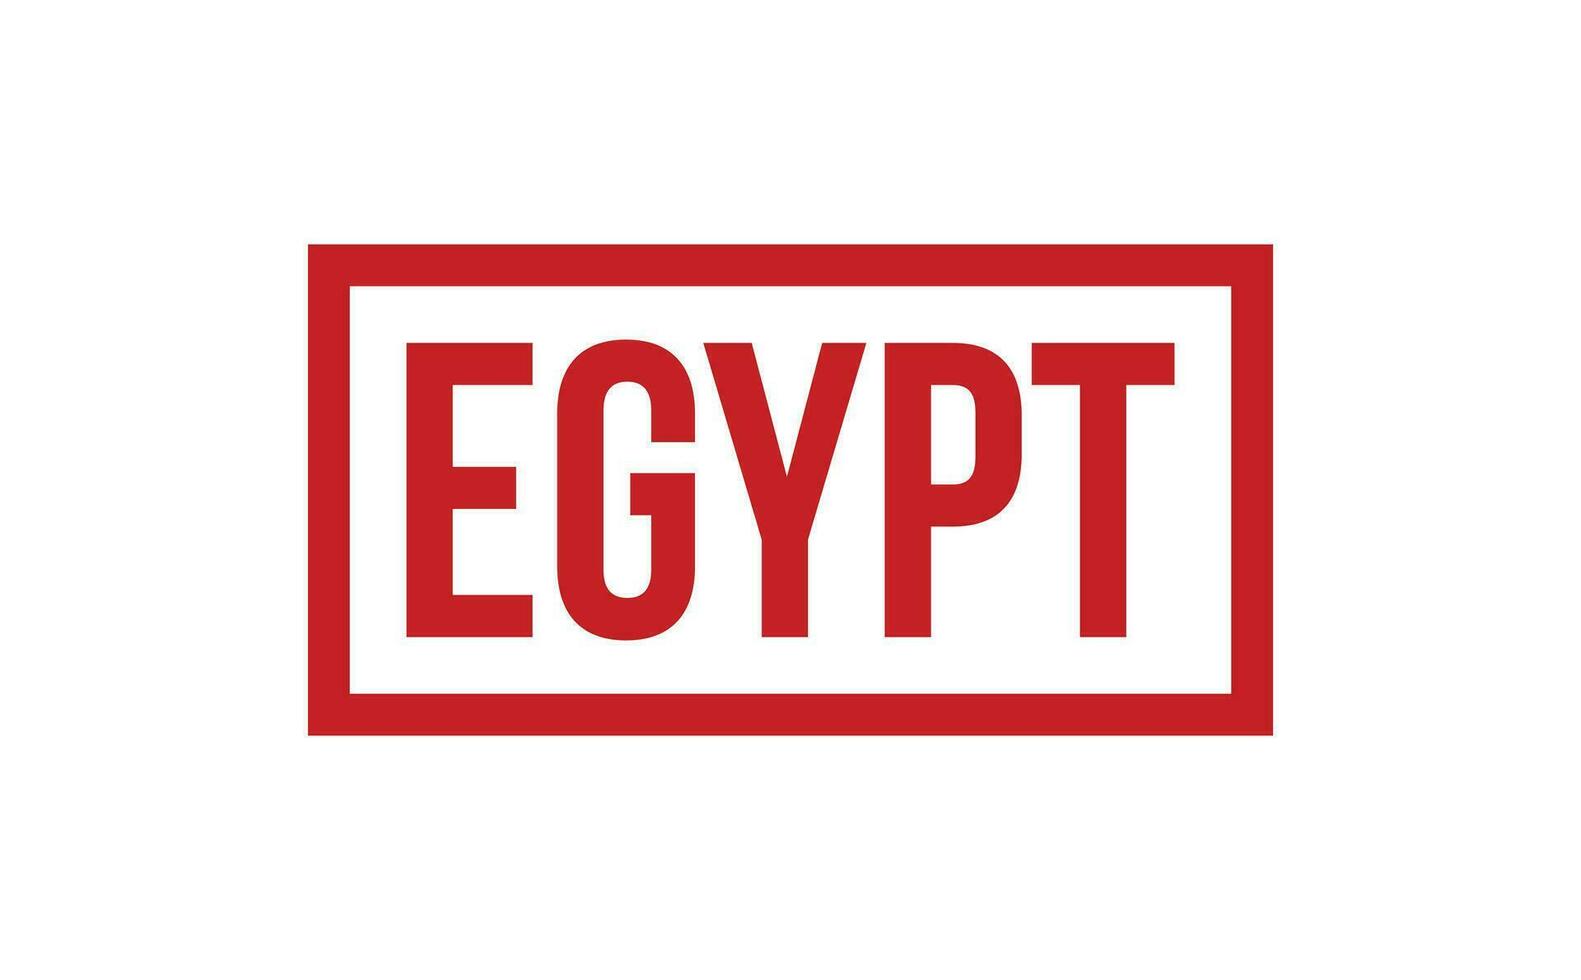 Ägypten Gummi Briefmarke Siegel Vektor